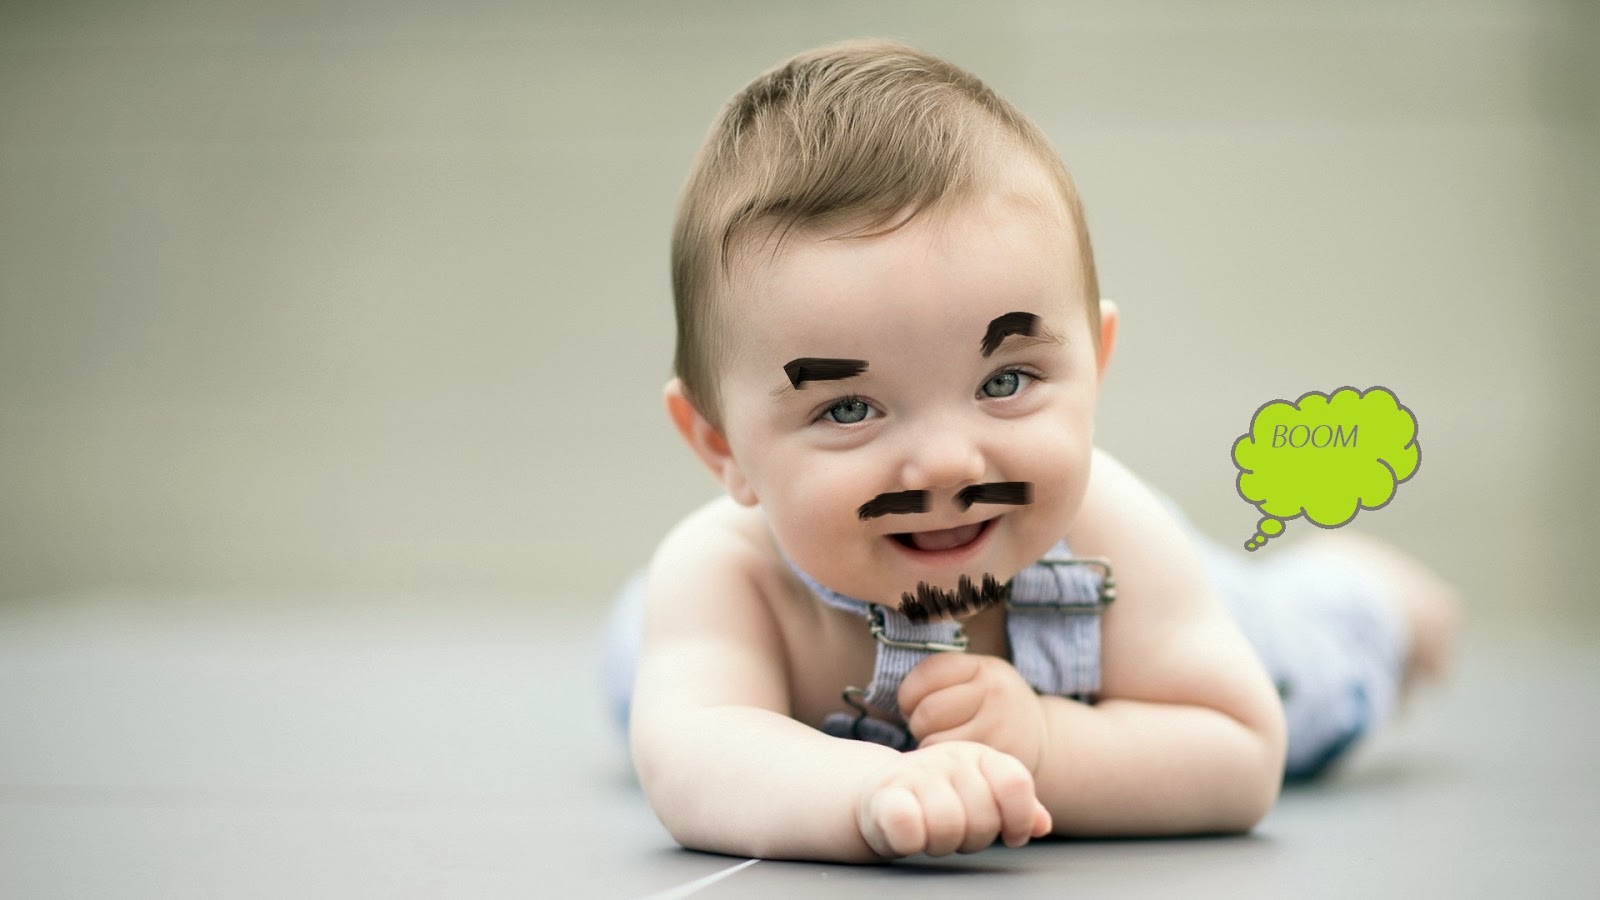 Kumpulan gambar bayi Lucu Imut - Funny and Cute baby images